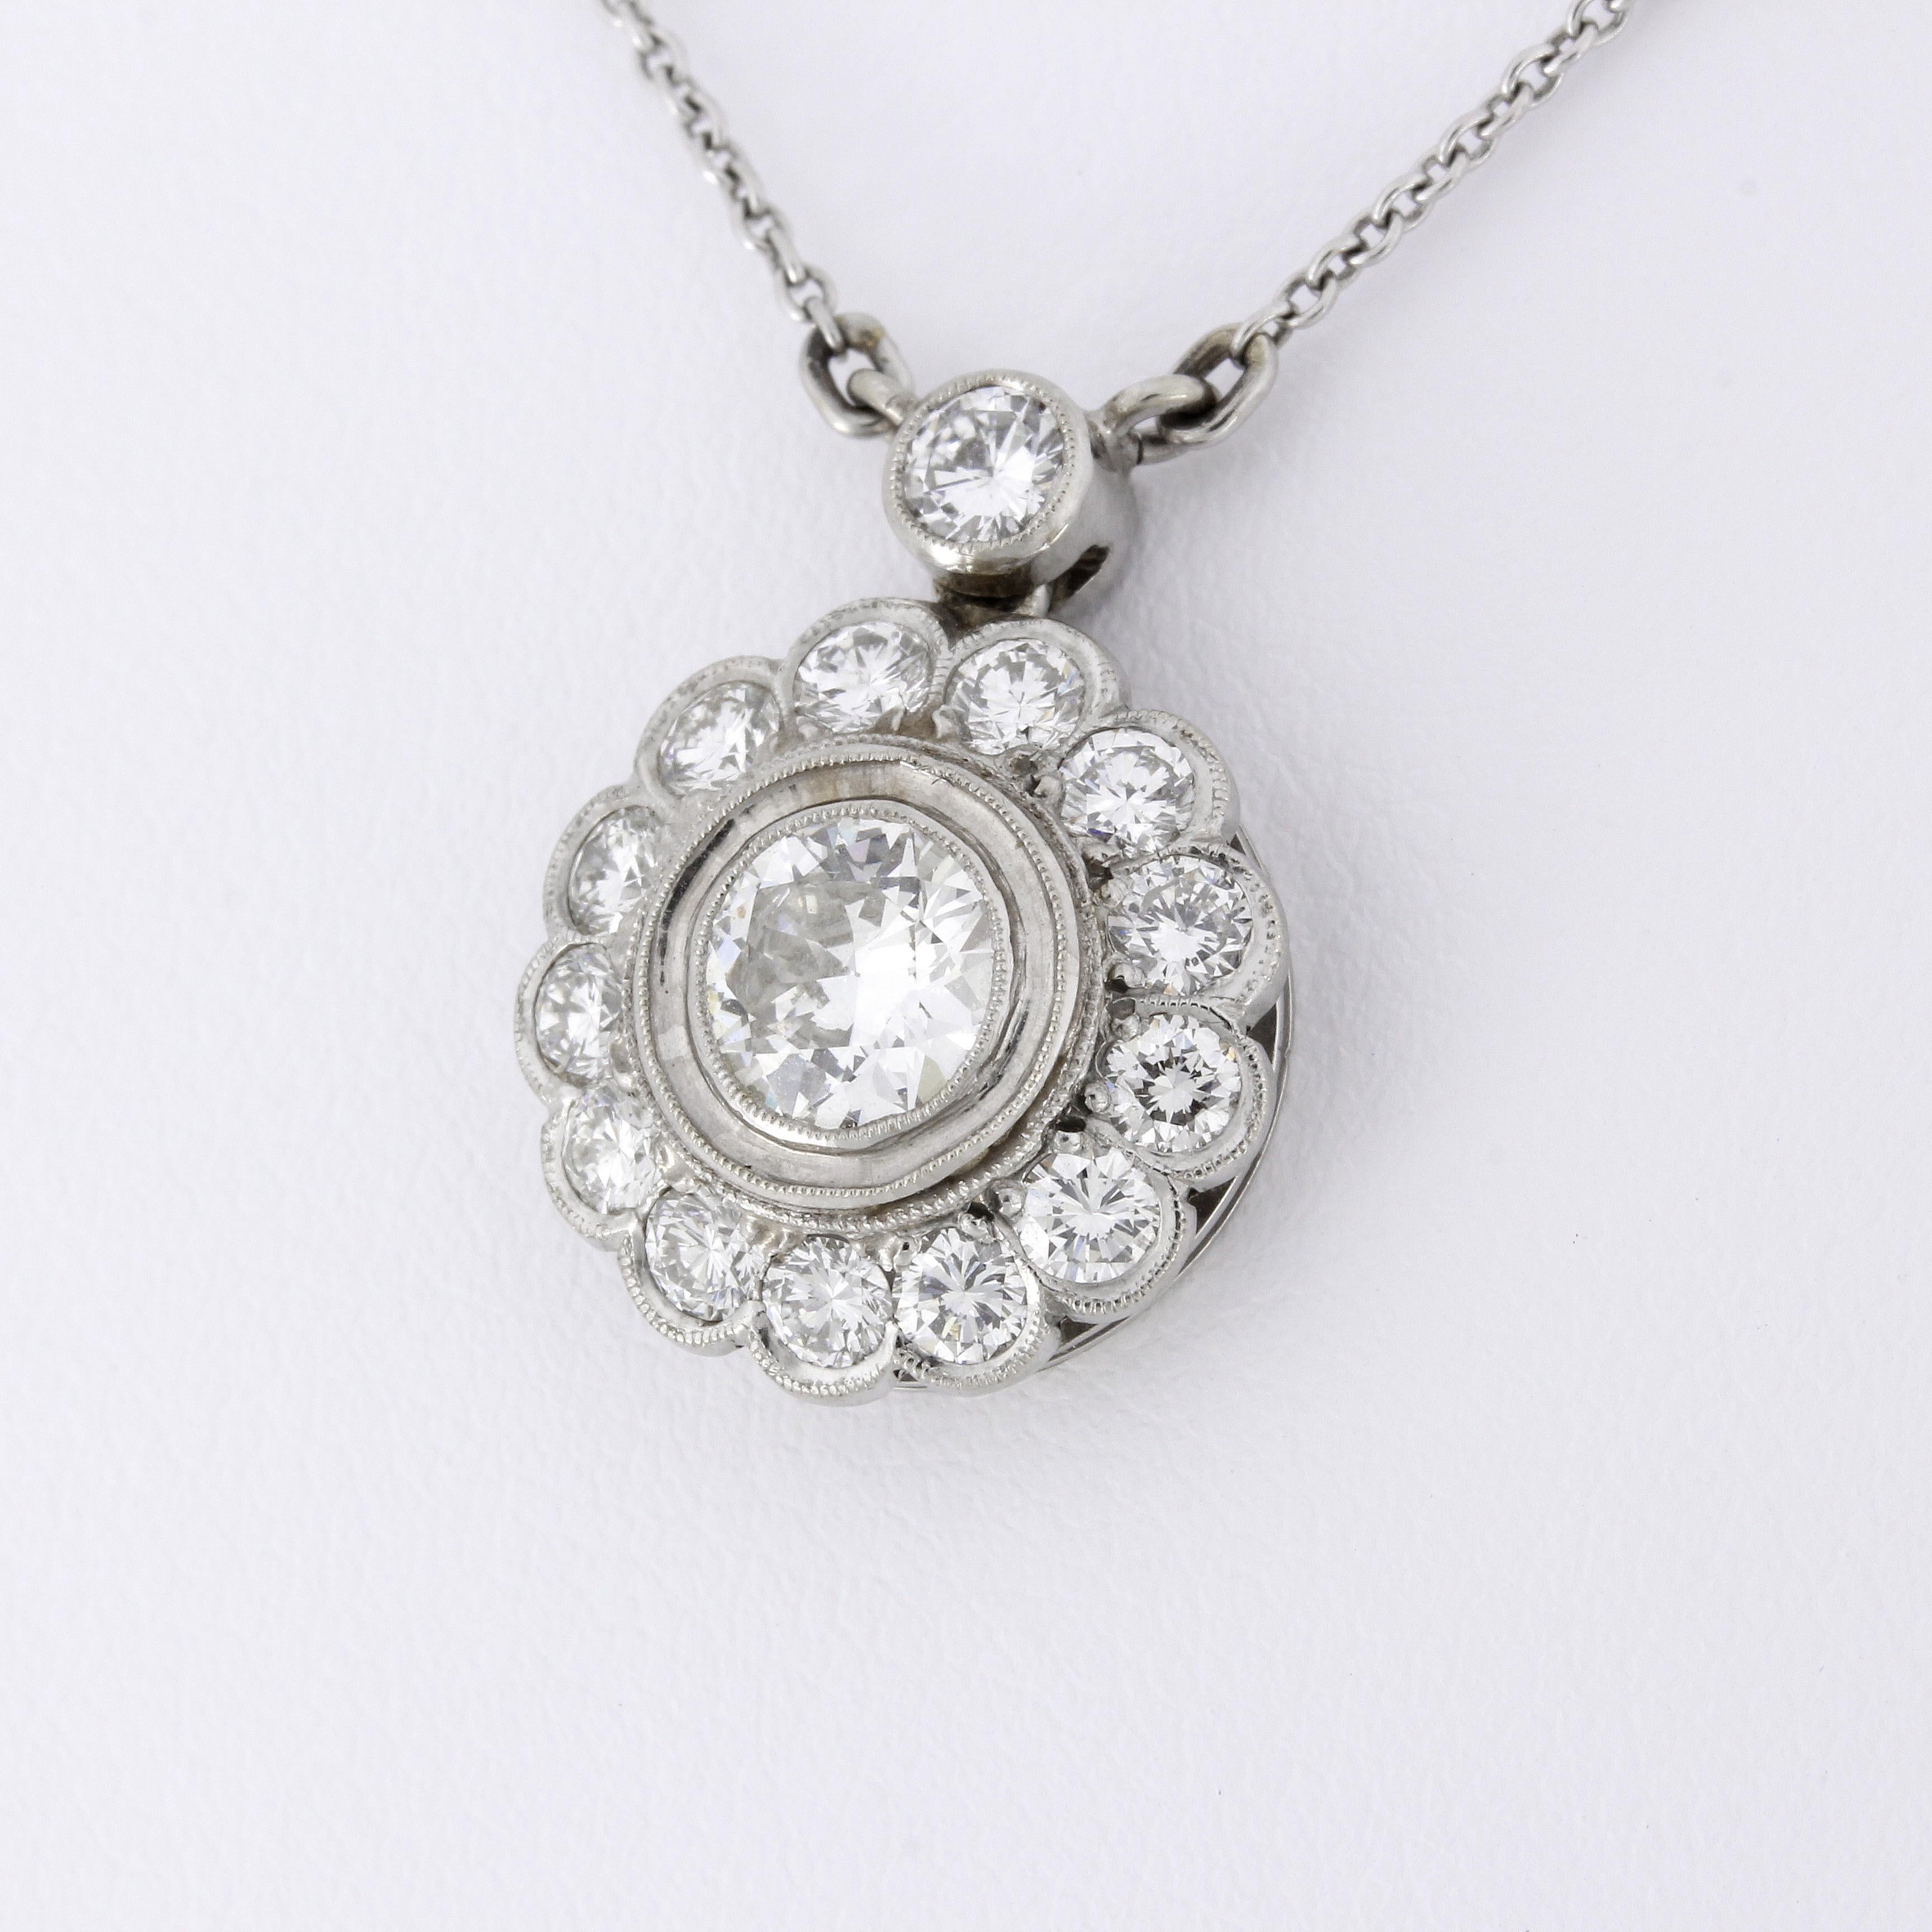 White Gold Diamond Pendant Necklace
15 Brilliant Cut Diamonds approx. 2 carat